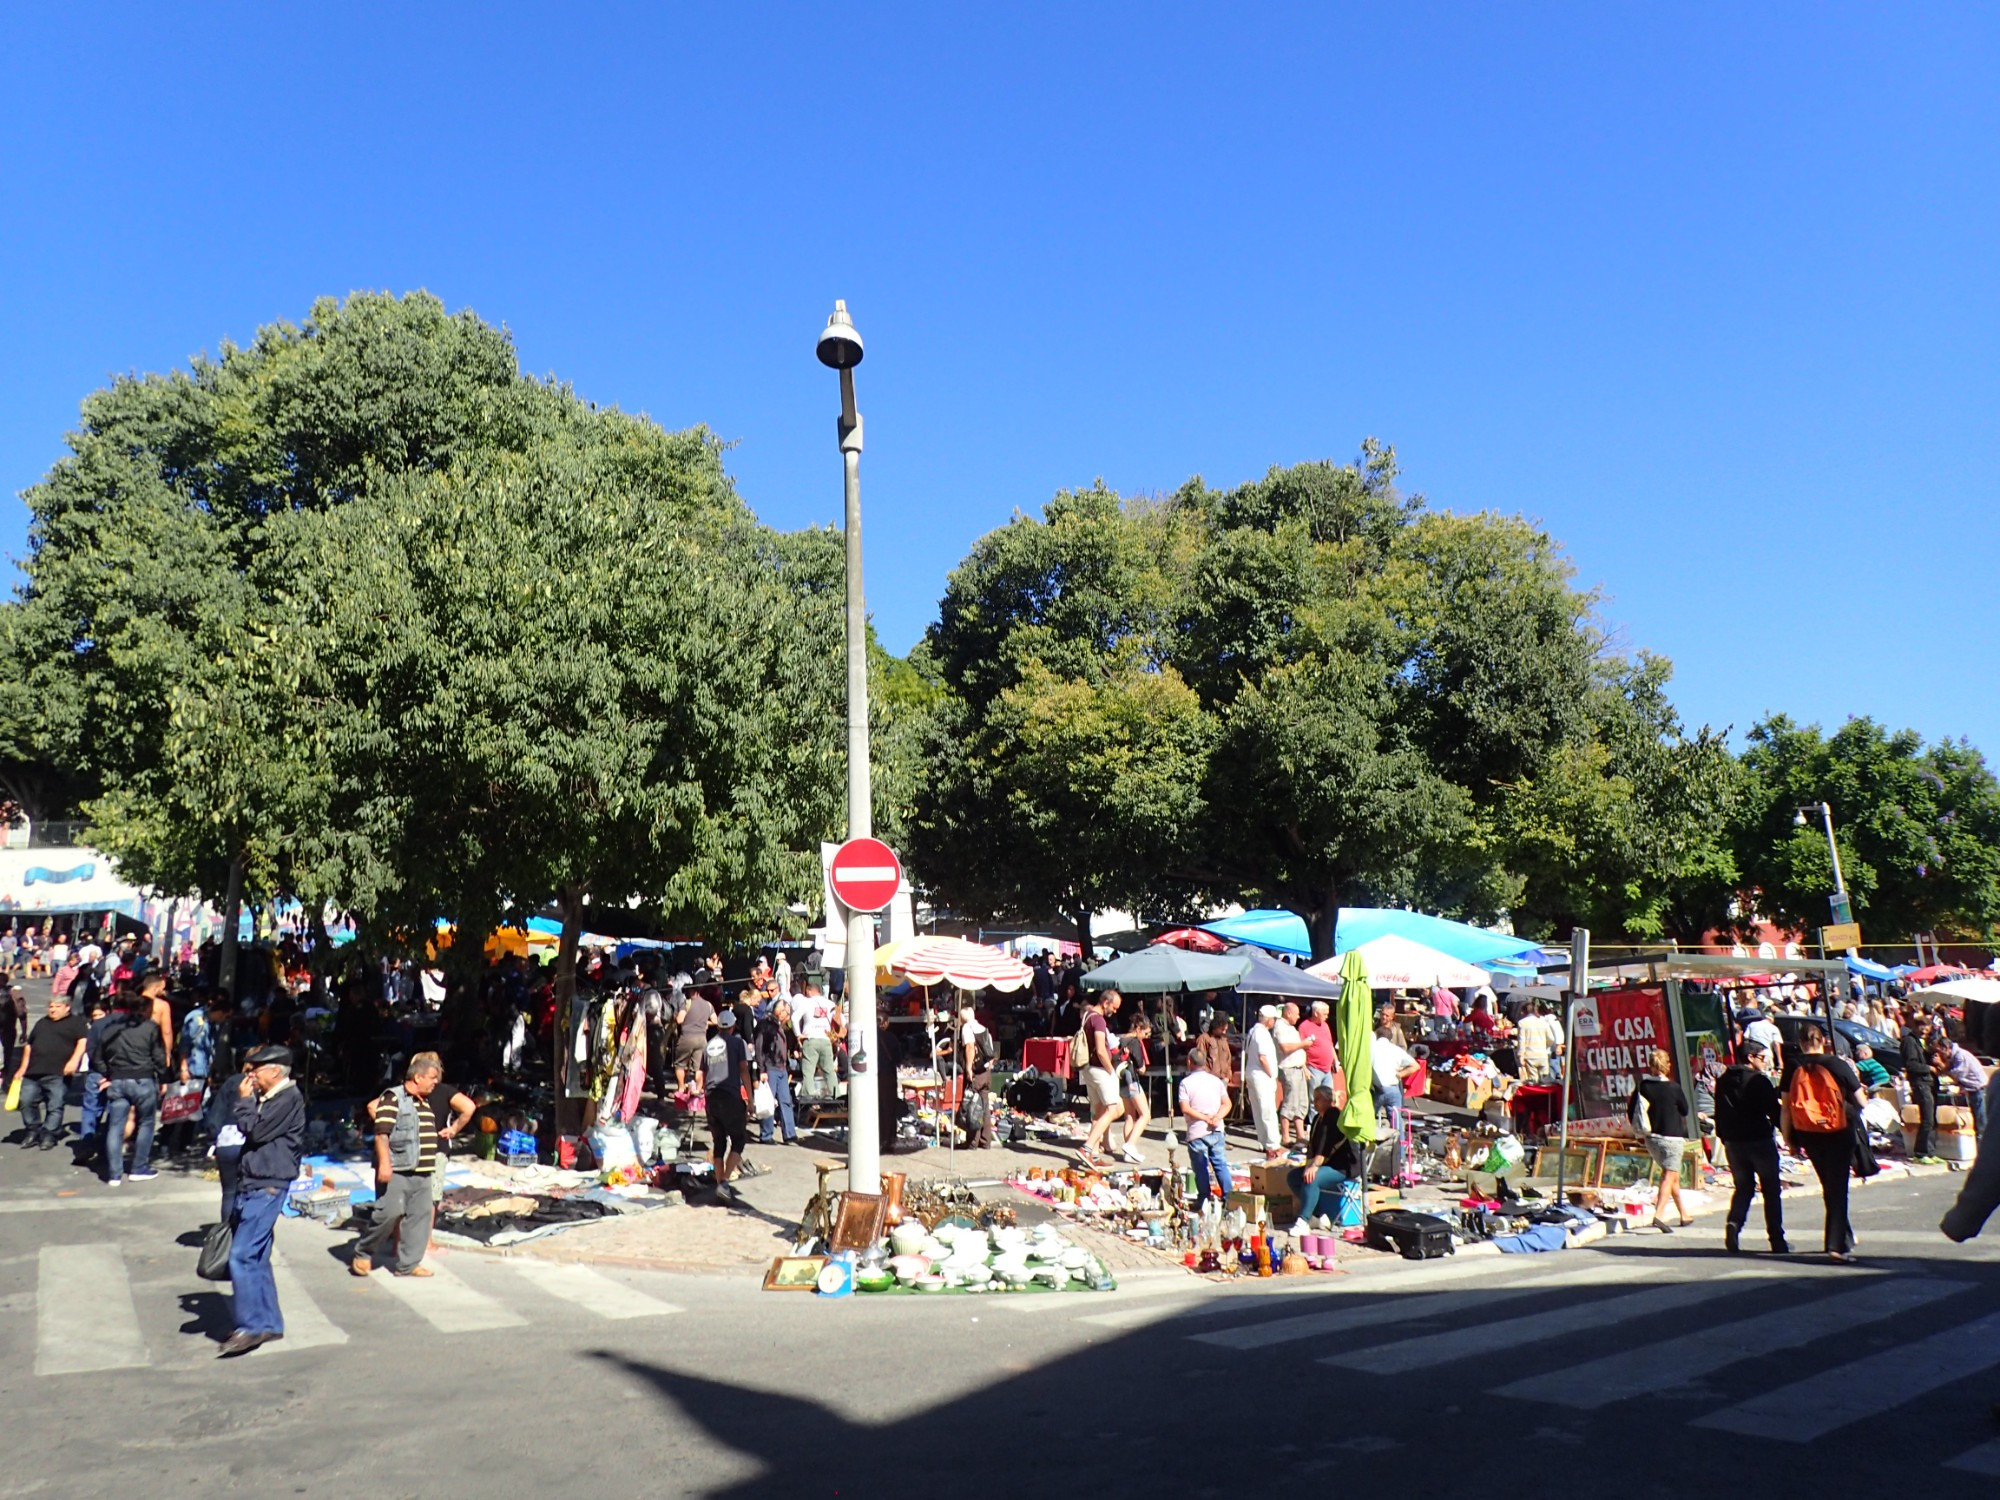 Mercado Santa Clara - Weekend Flea Market, Португалия